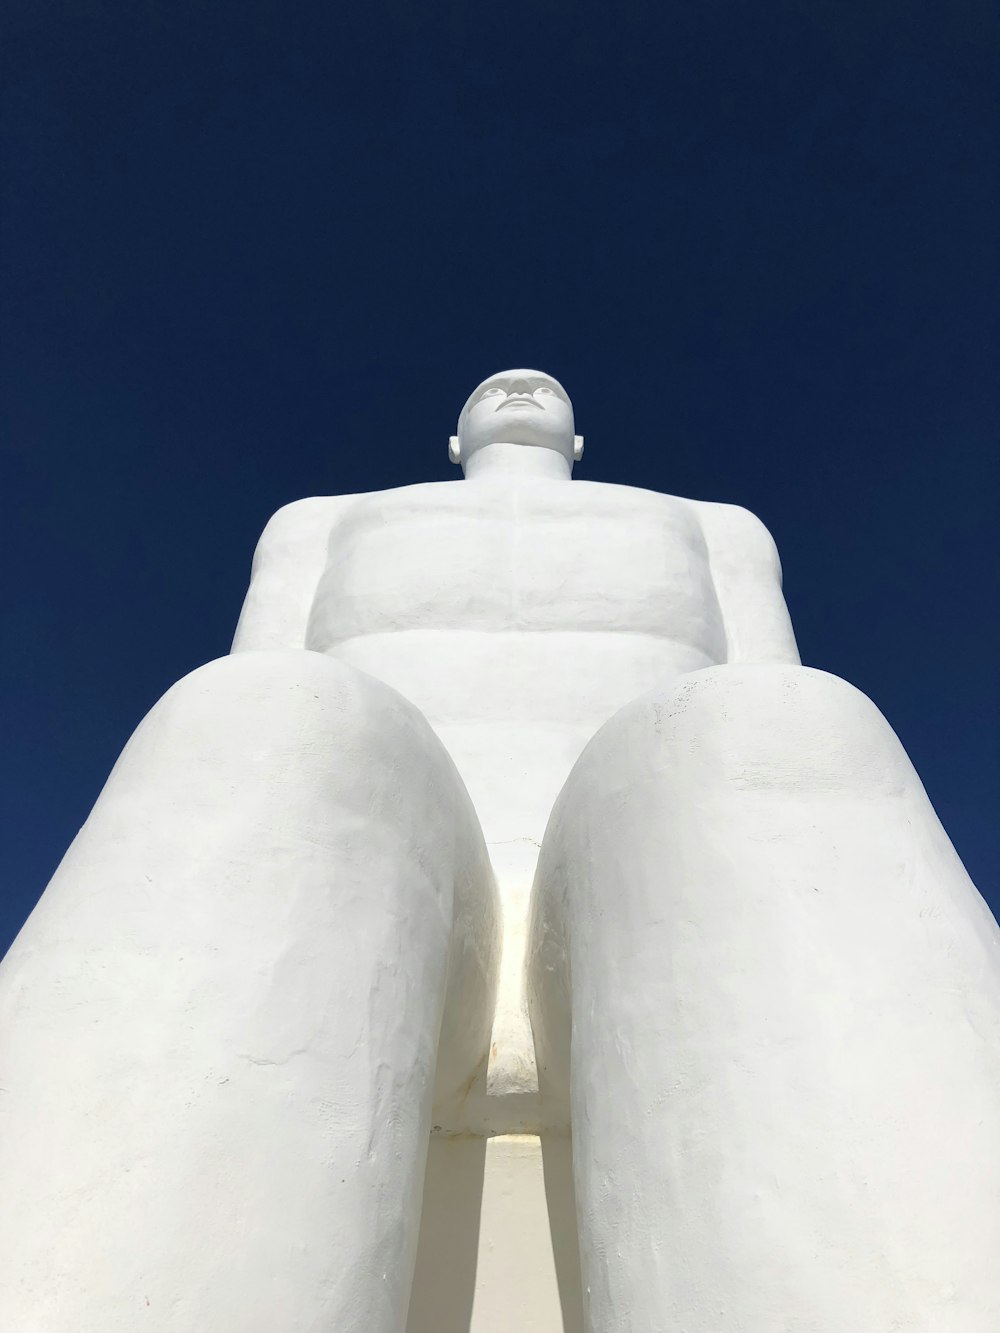 a close-up of a statue